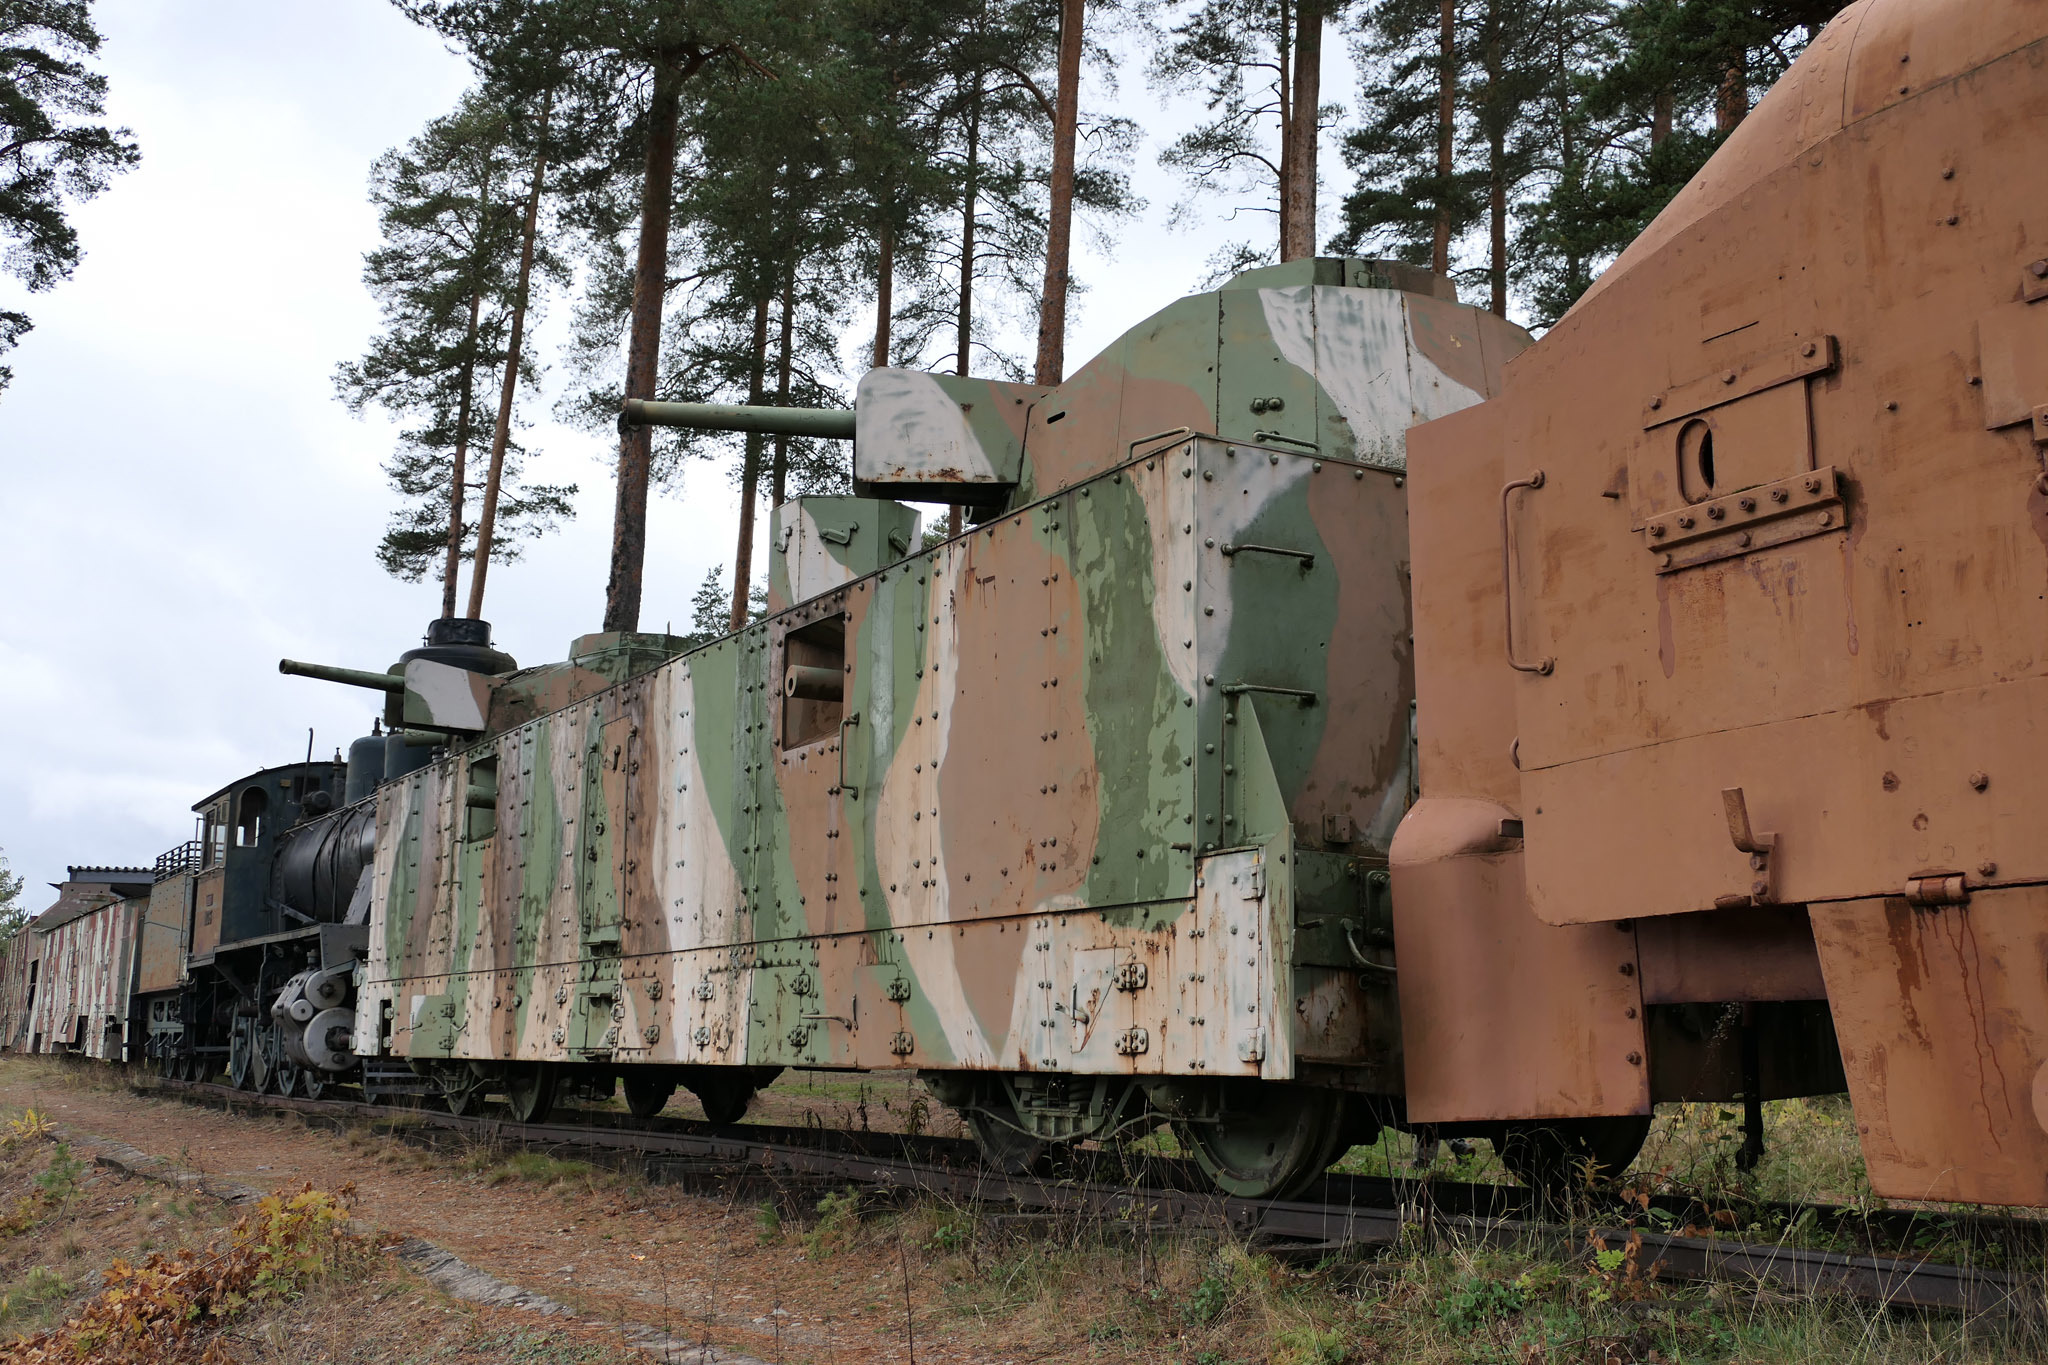 Broneunikum from Finland - Museum, Armoured train, Finland, Story, Interesting, Longpost